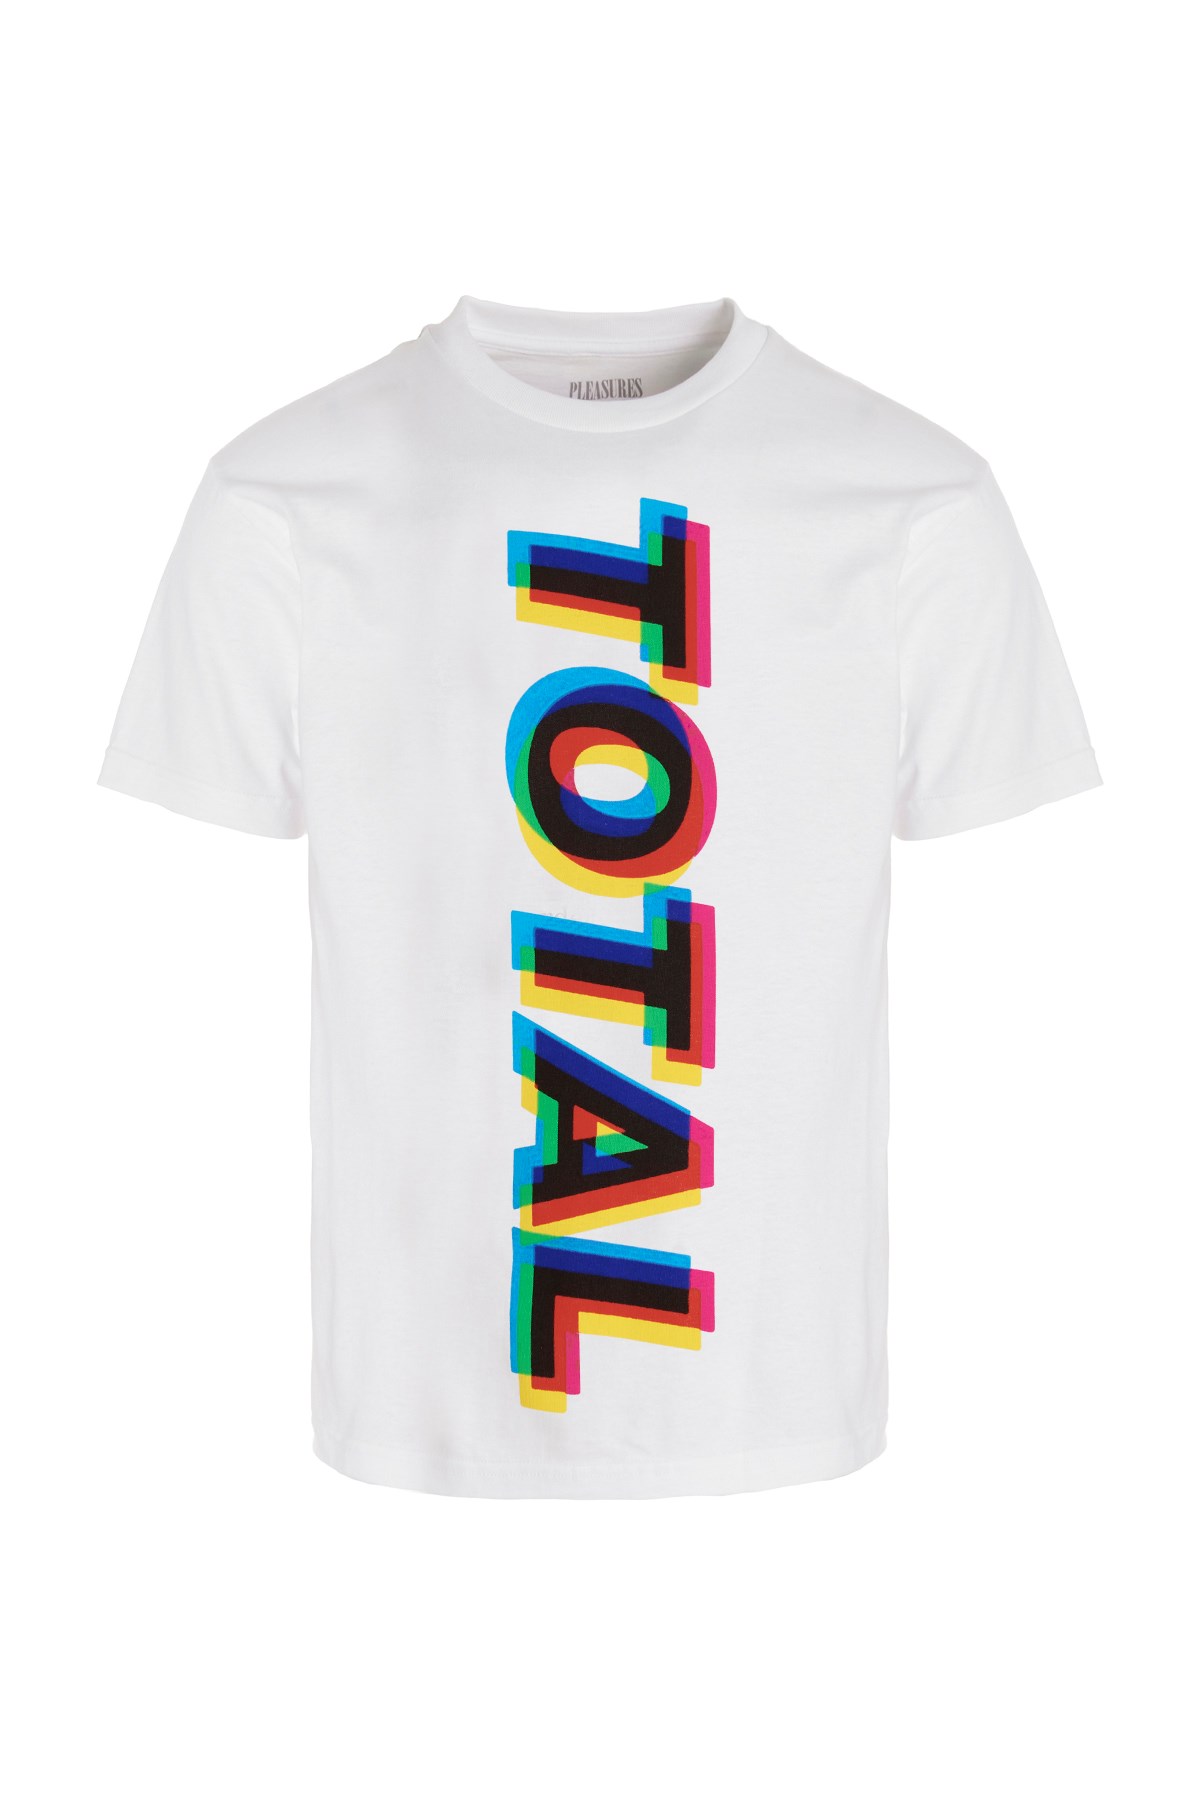 PLEASURES New Order Kapsel – T-Shirt 'Total'